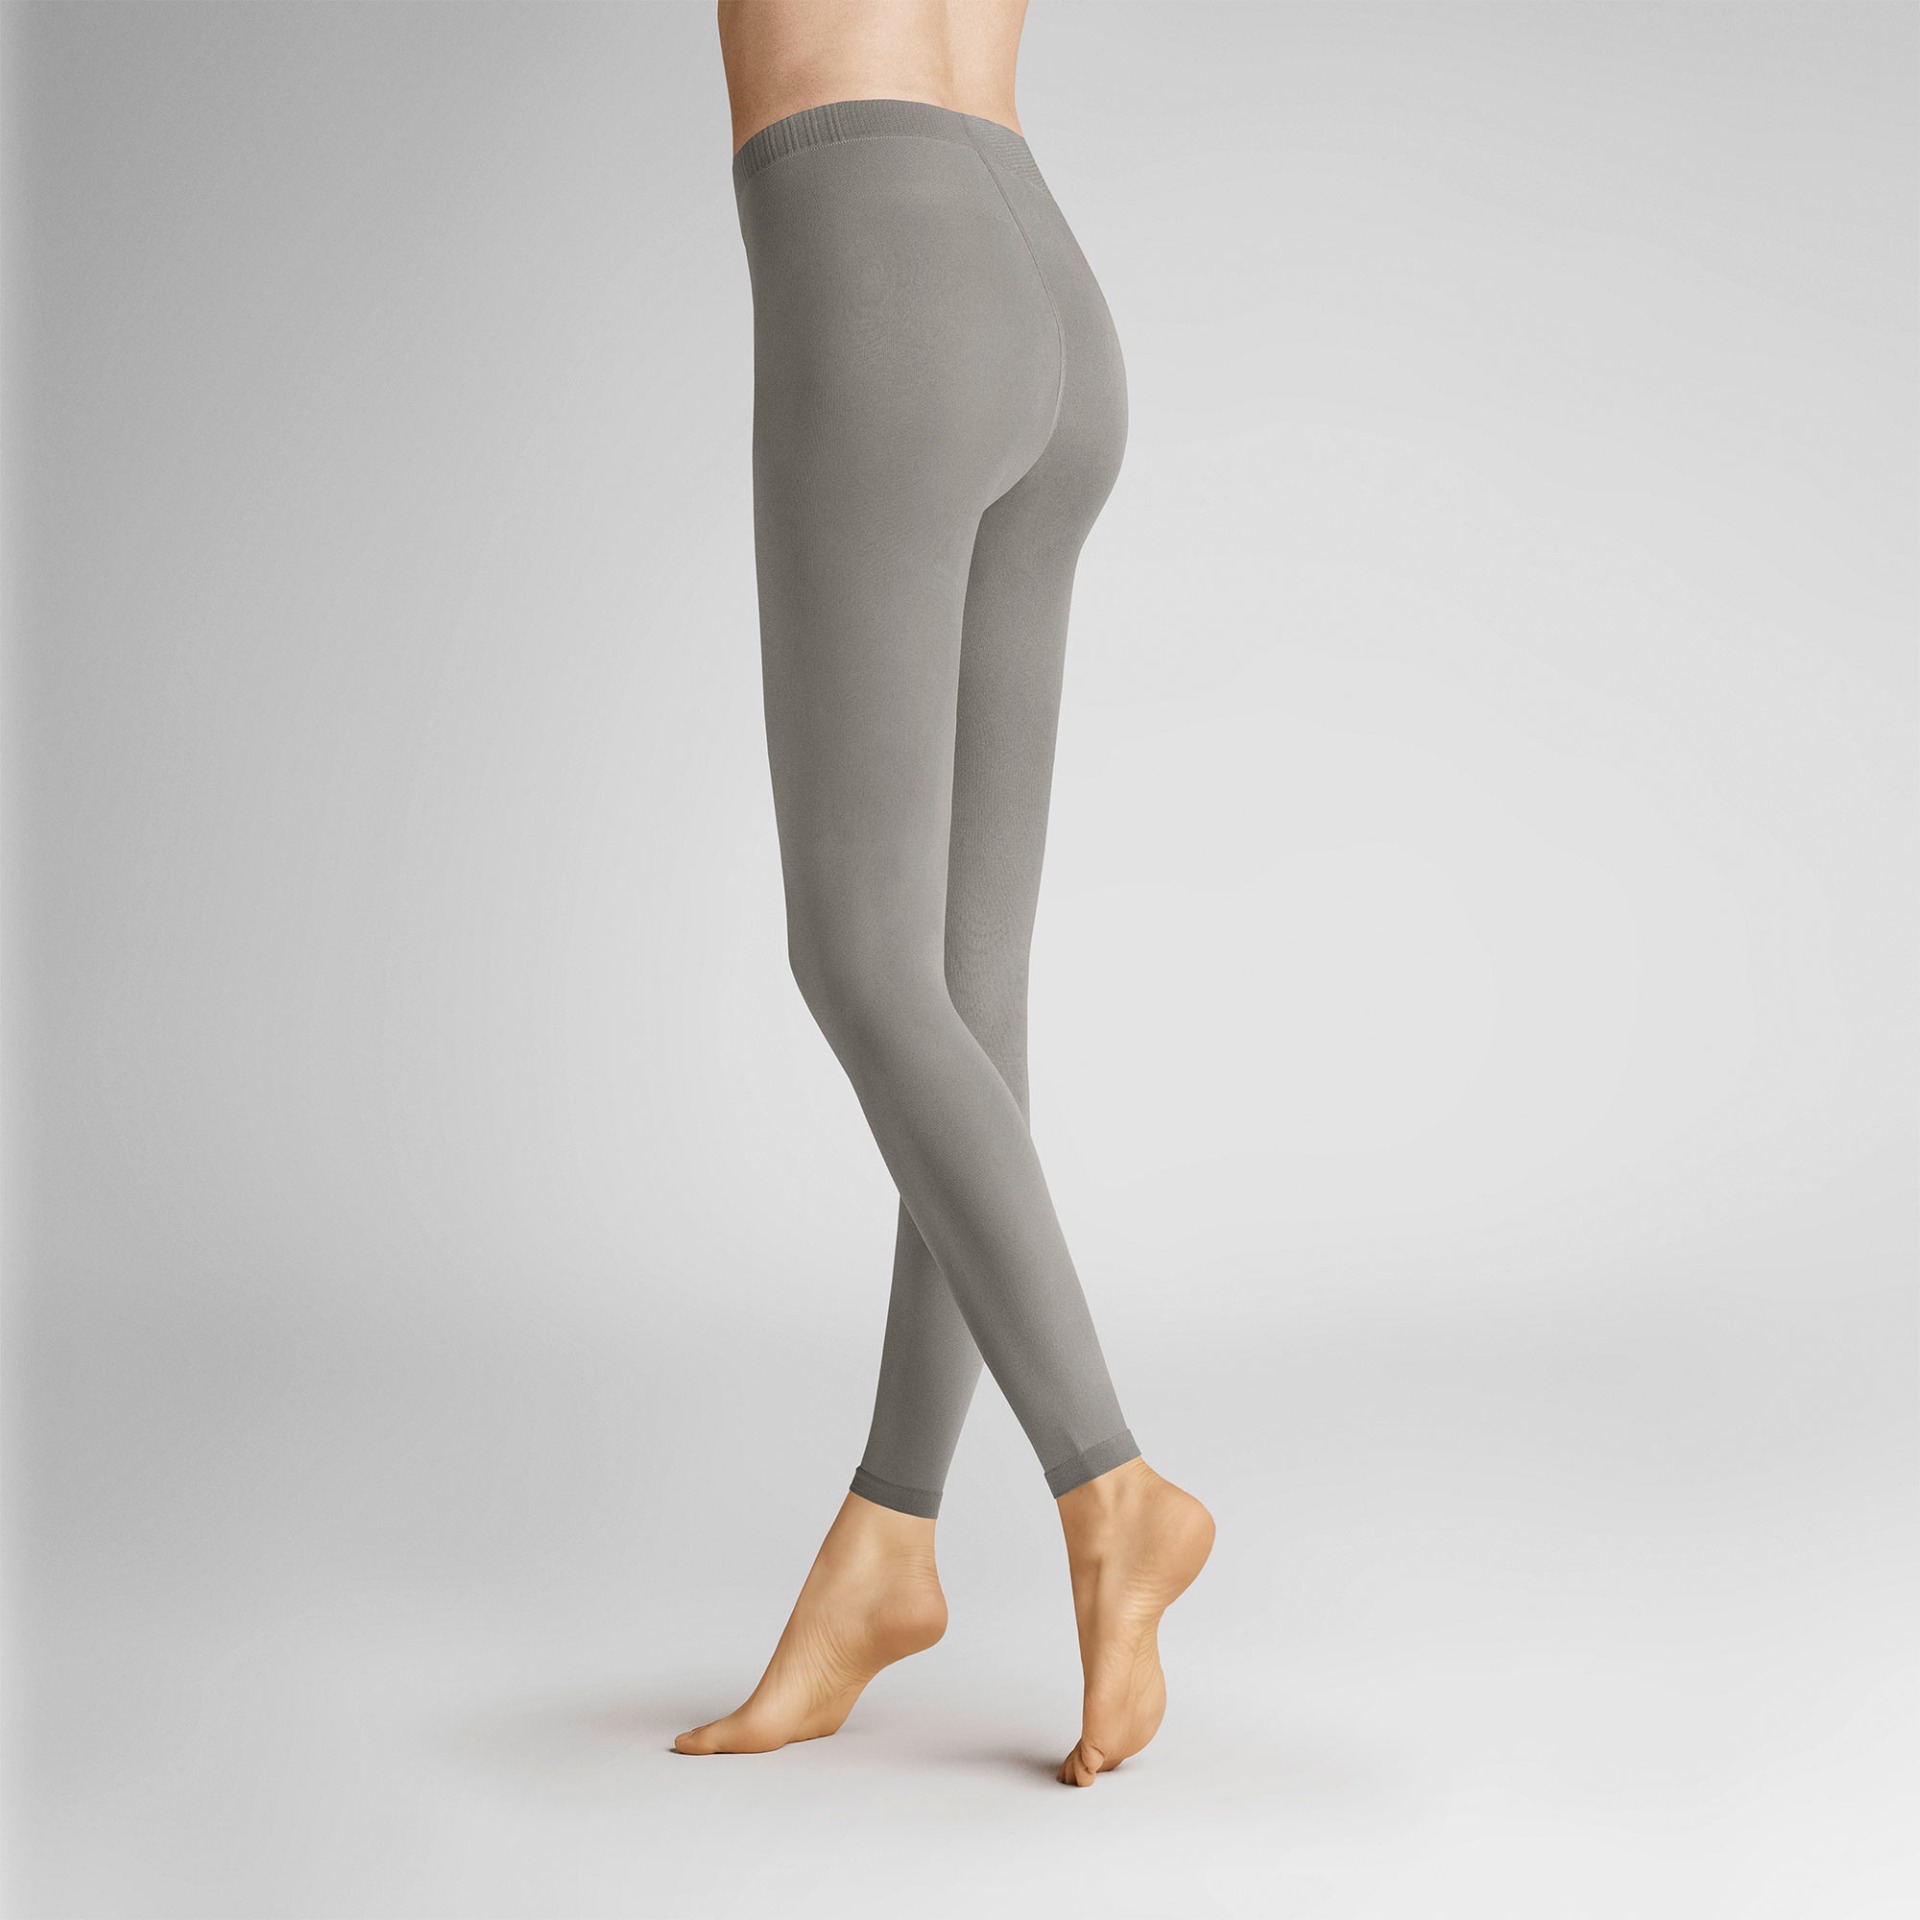 HUDSON Damen MICRO 50 -  40/42 - Semi-blickdichte Leggings mit ebenmäßiger Optik - Slate gray 0106 (Grau)